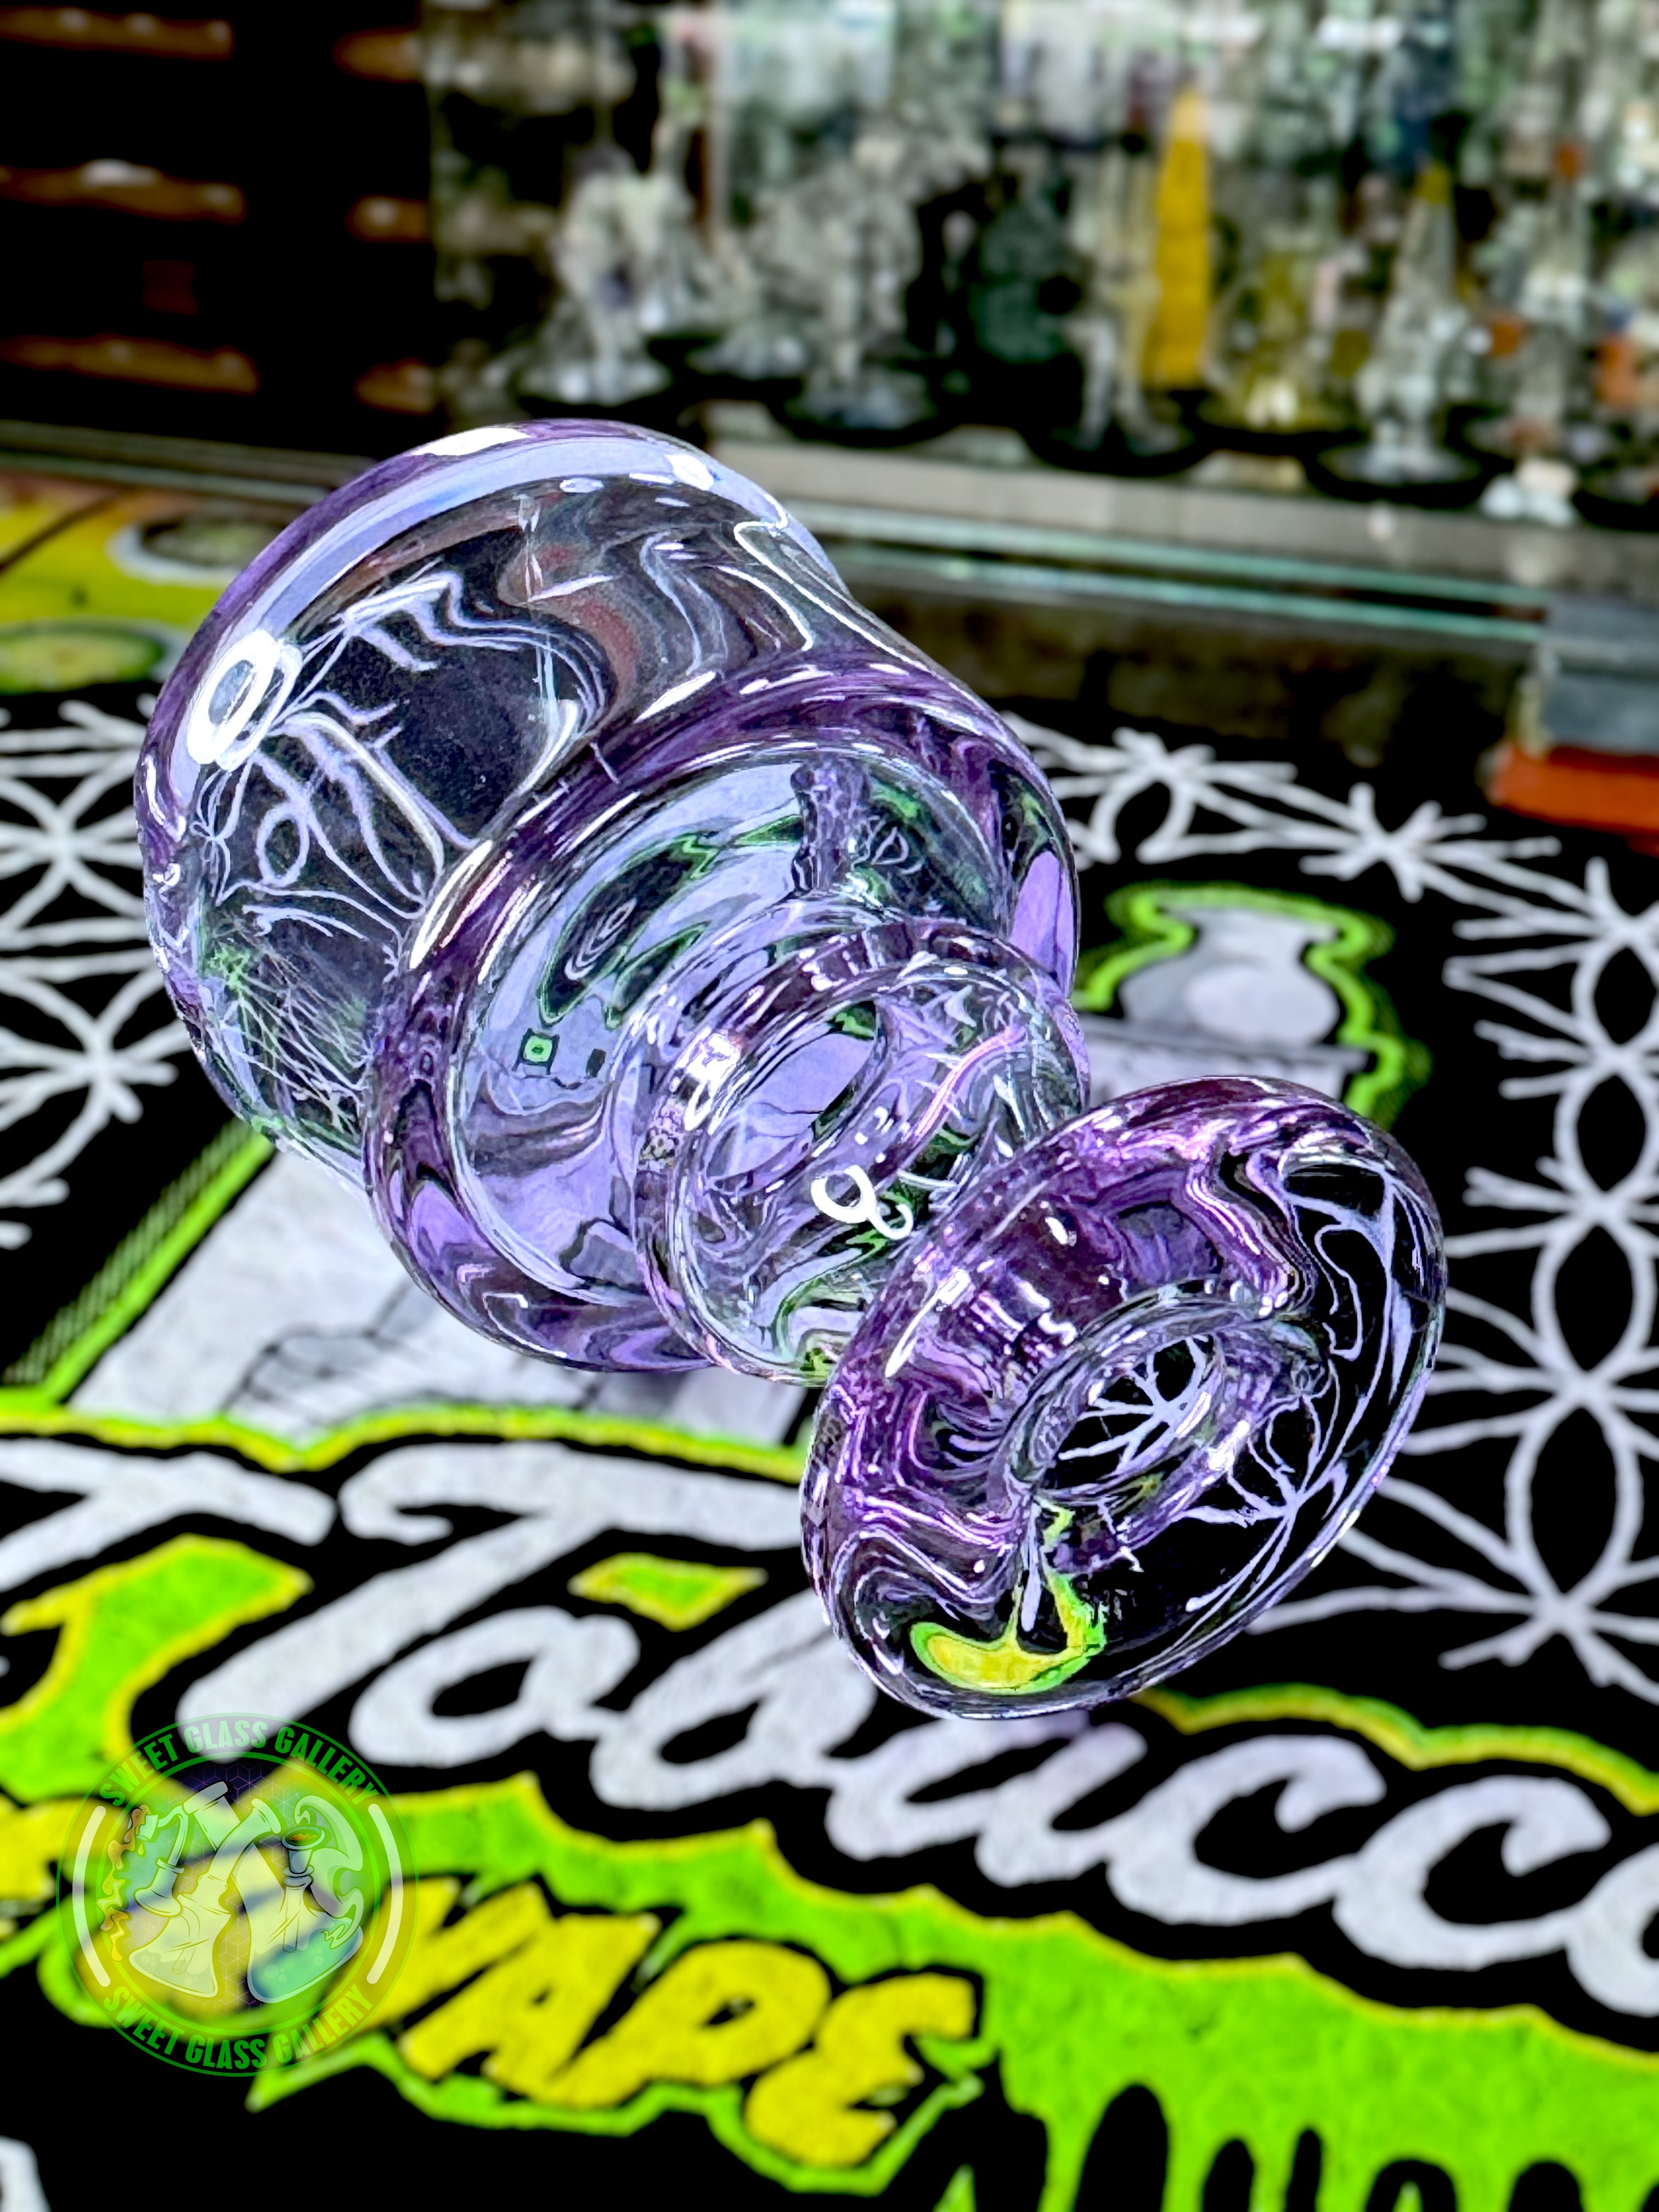 Evol Glass - Dry Puffco Attachment - Transparent Purple